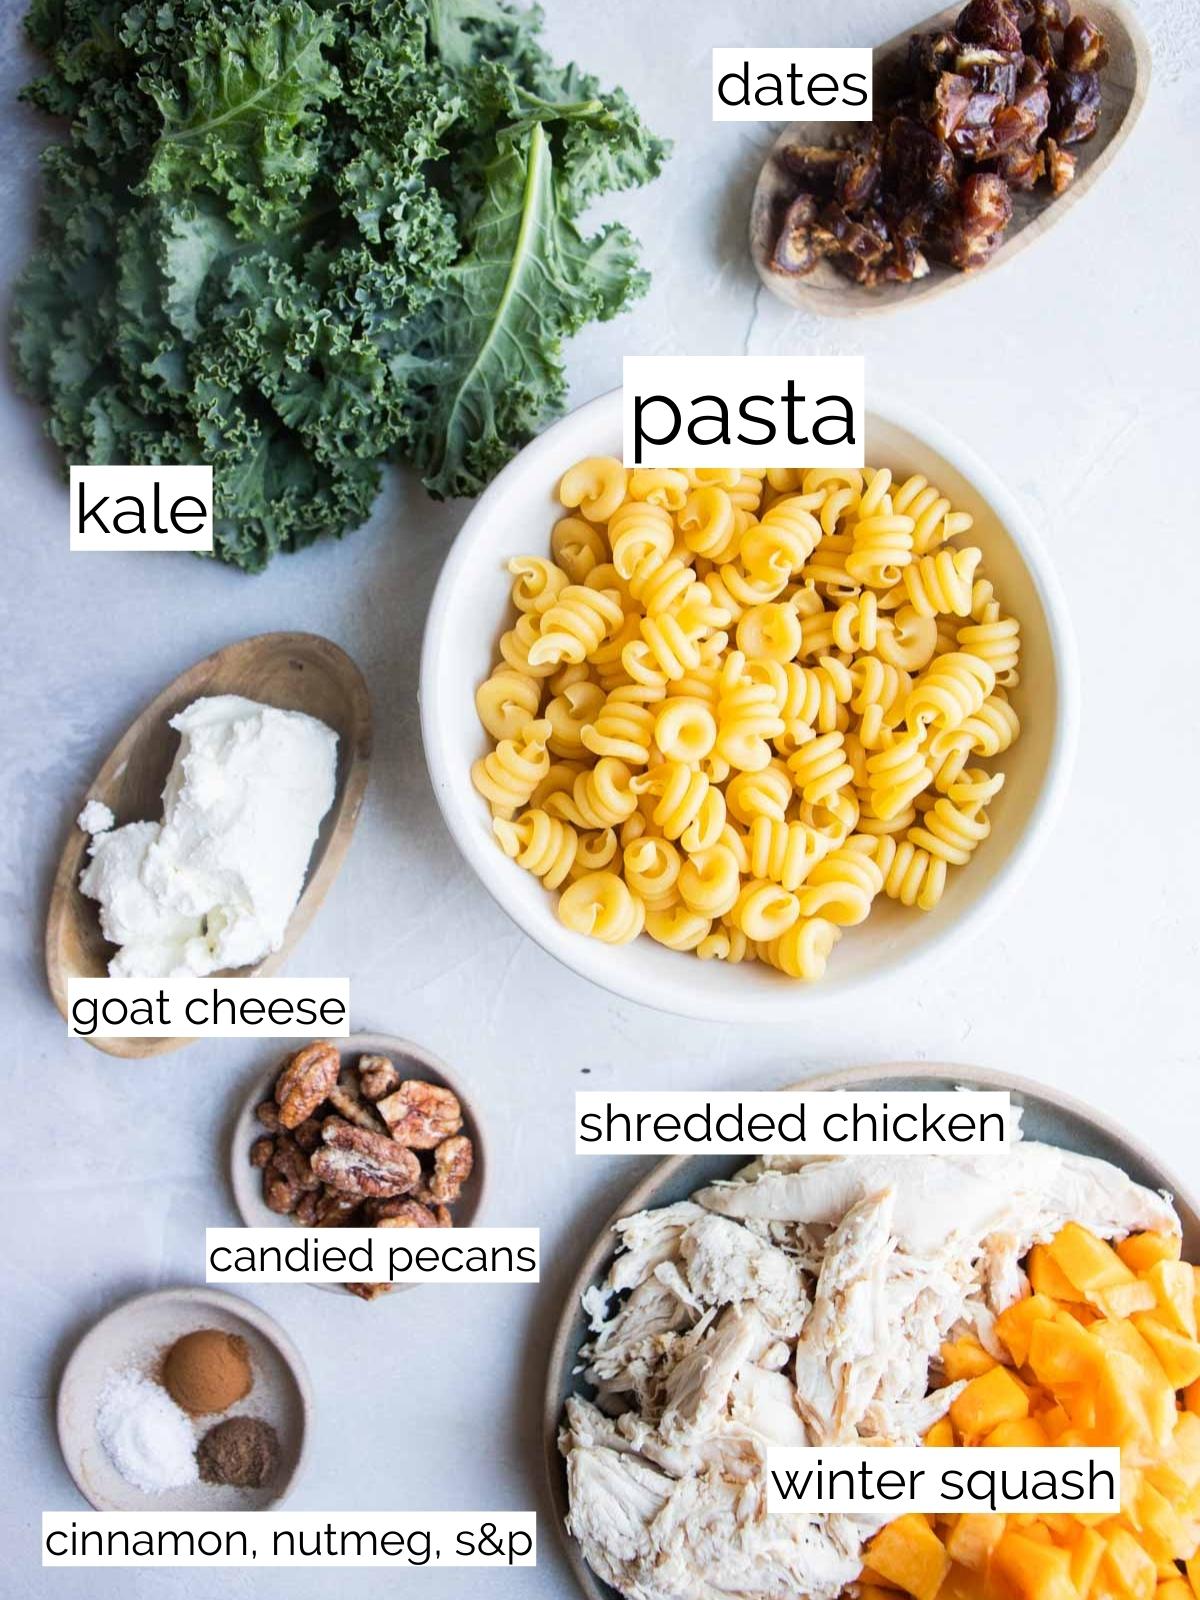 raw ingredients to make a fall pasta salad